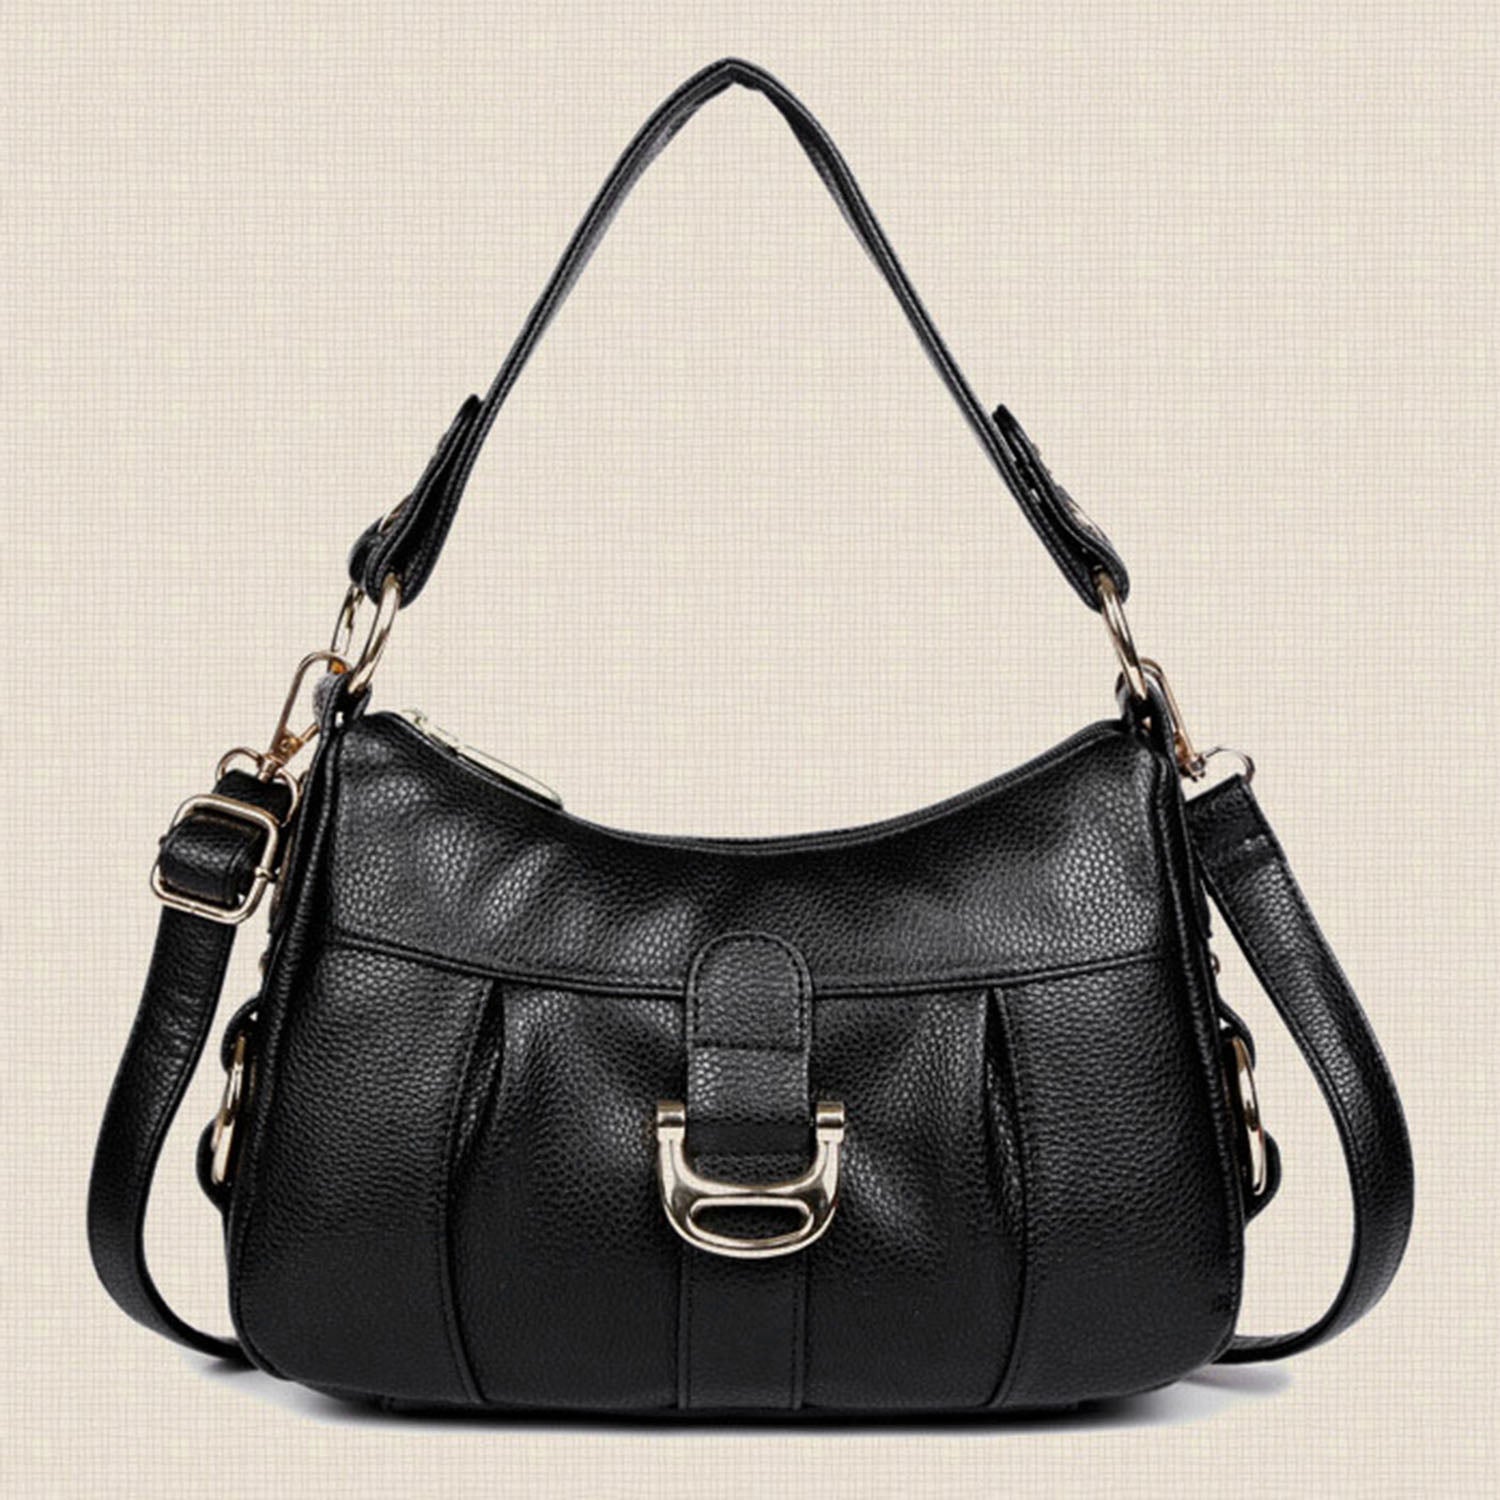 Aibkhk Handbags Women Bags Designer Leather Ladies Shoulder Casual Crossbody Soft Top-Handle Bags - ebowsos